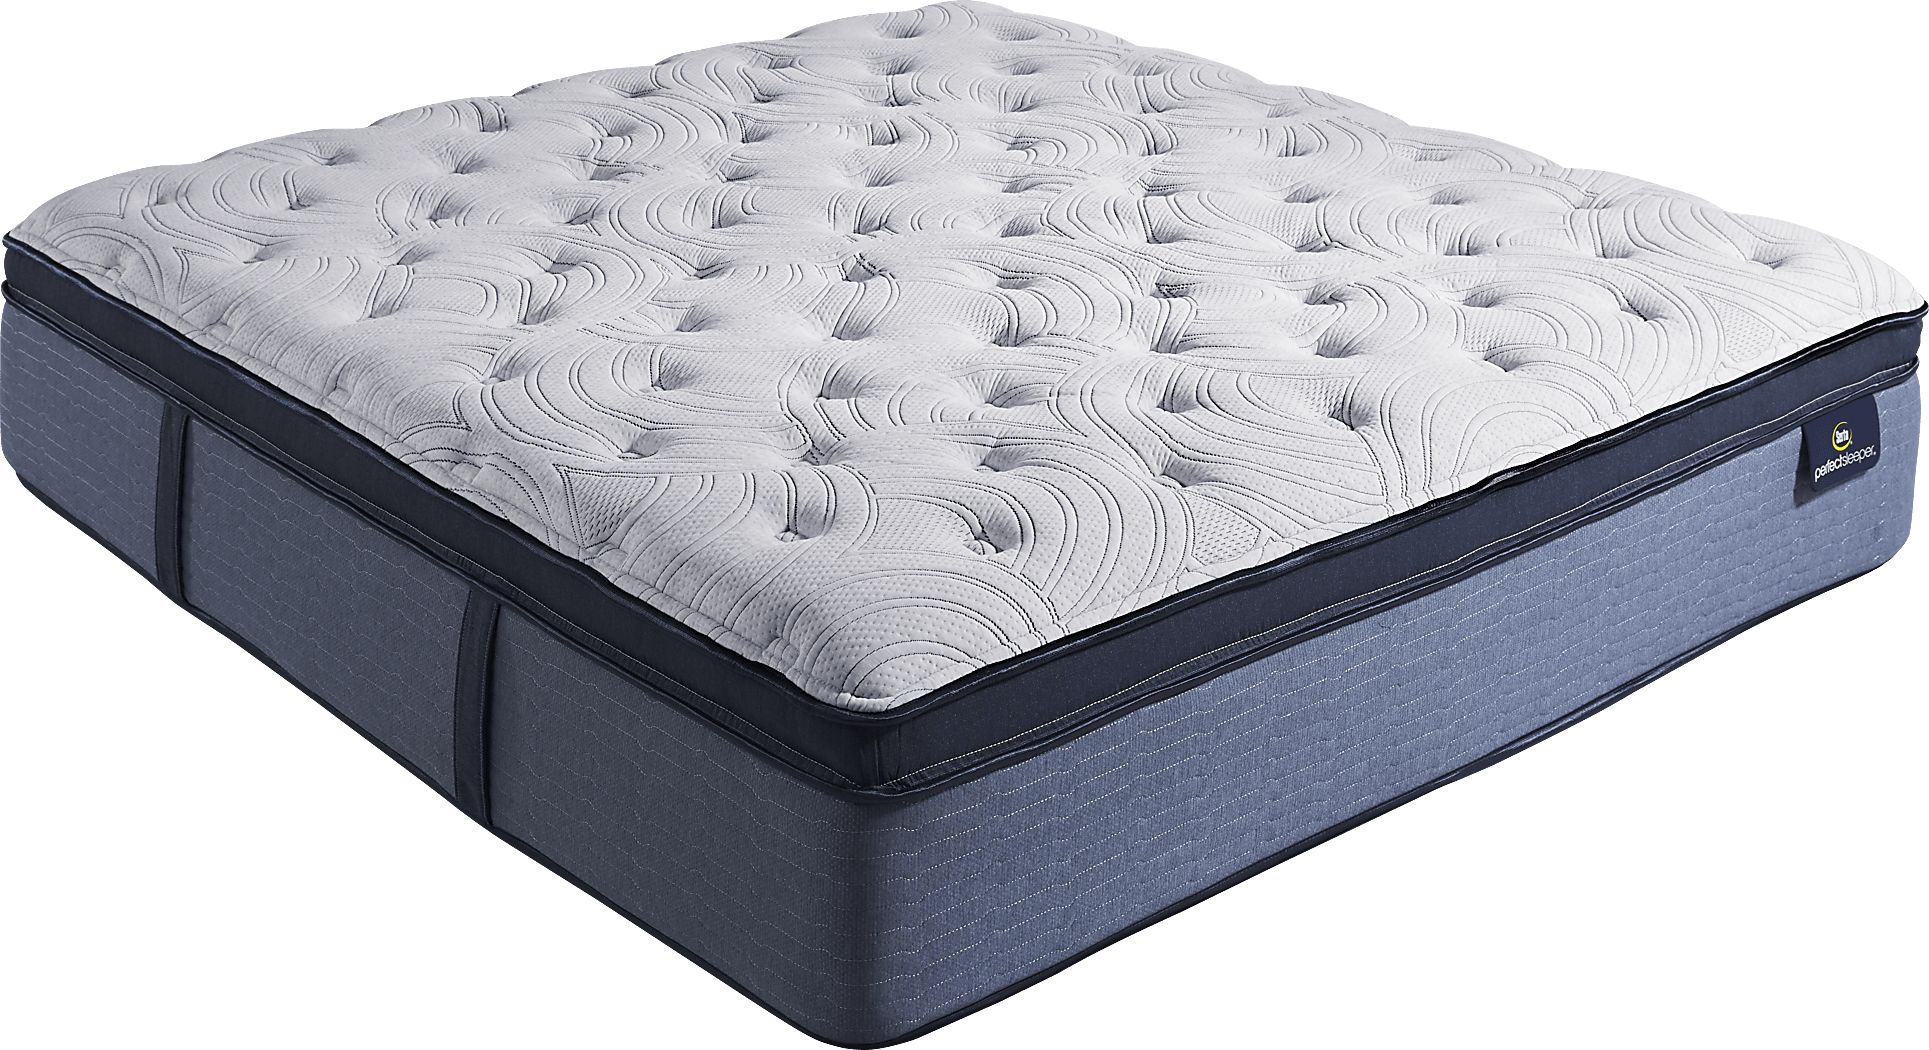 serta california king mattress bed withtopper